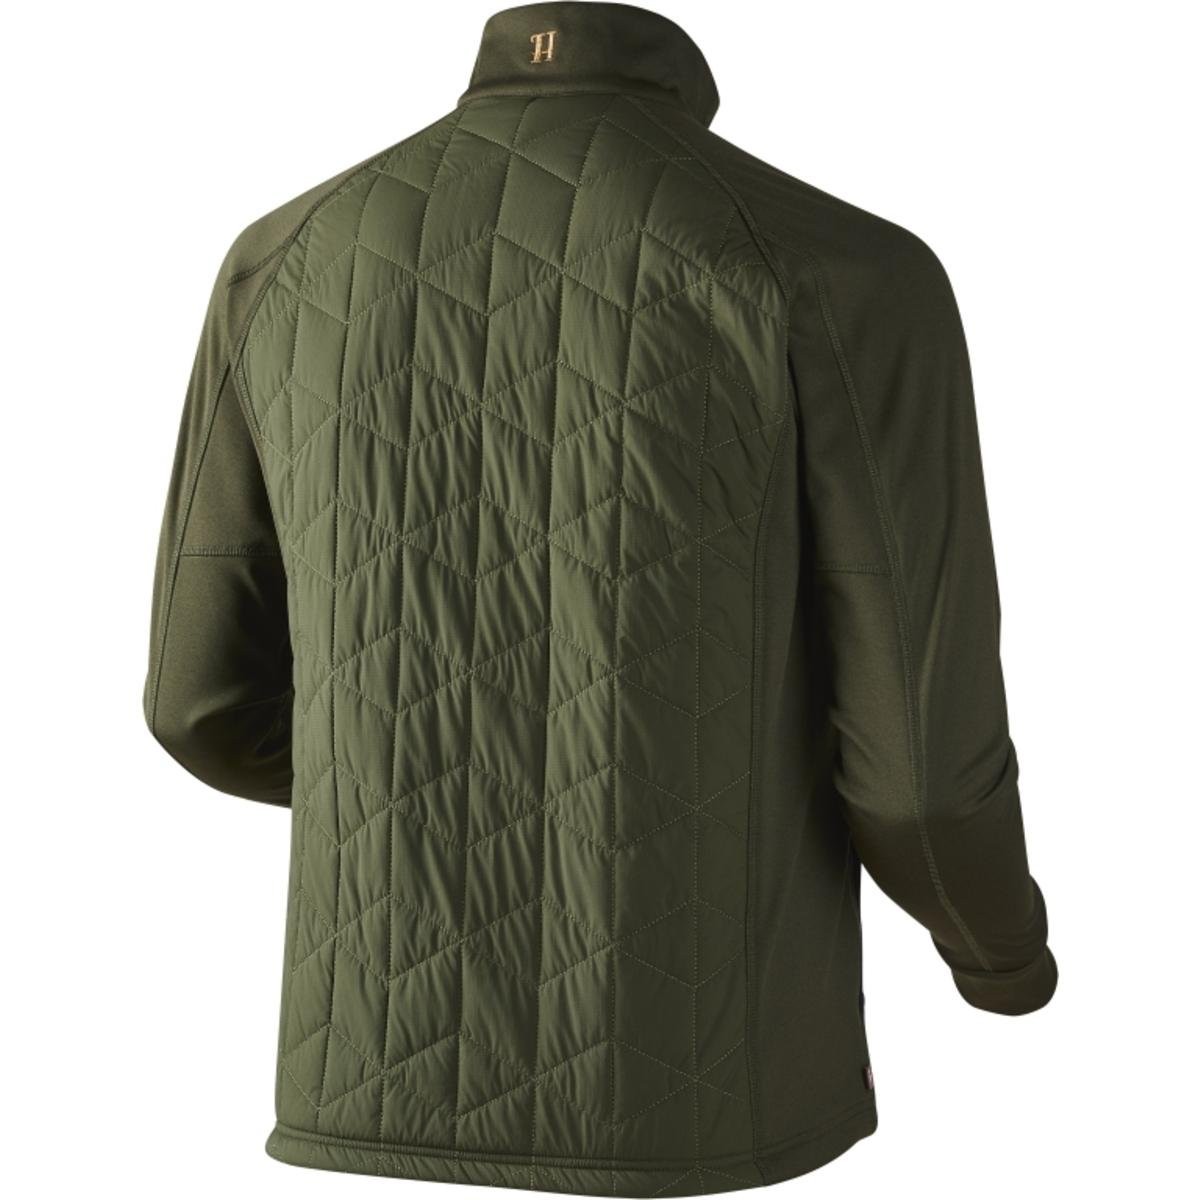 Куртка Harkila Hjartvar Insulated Hybrid jakke dark rifle green melange